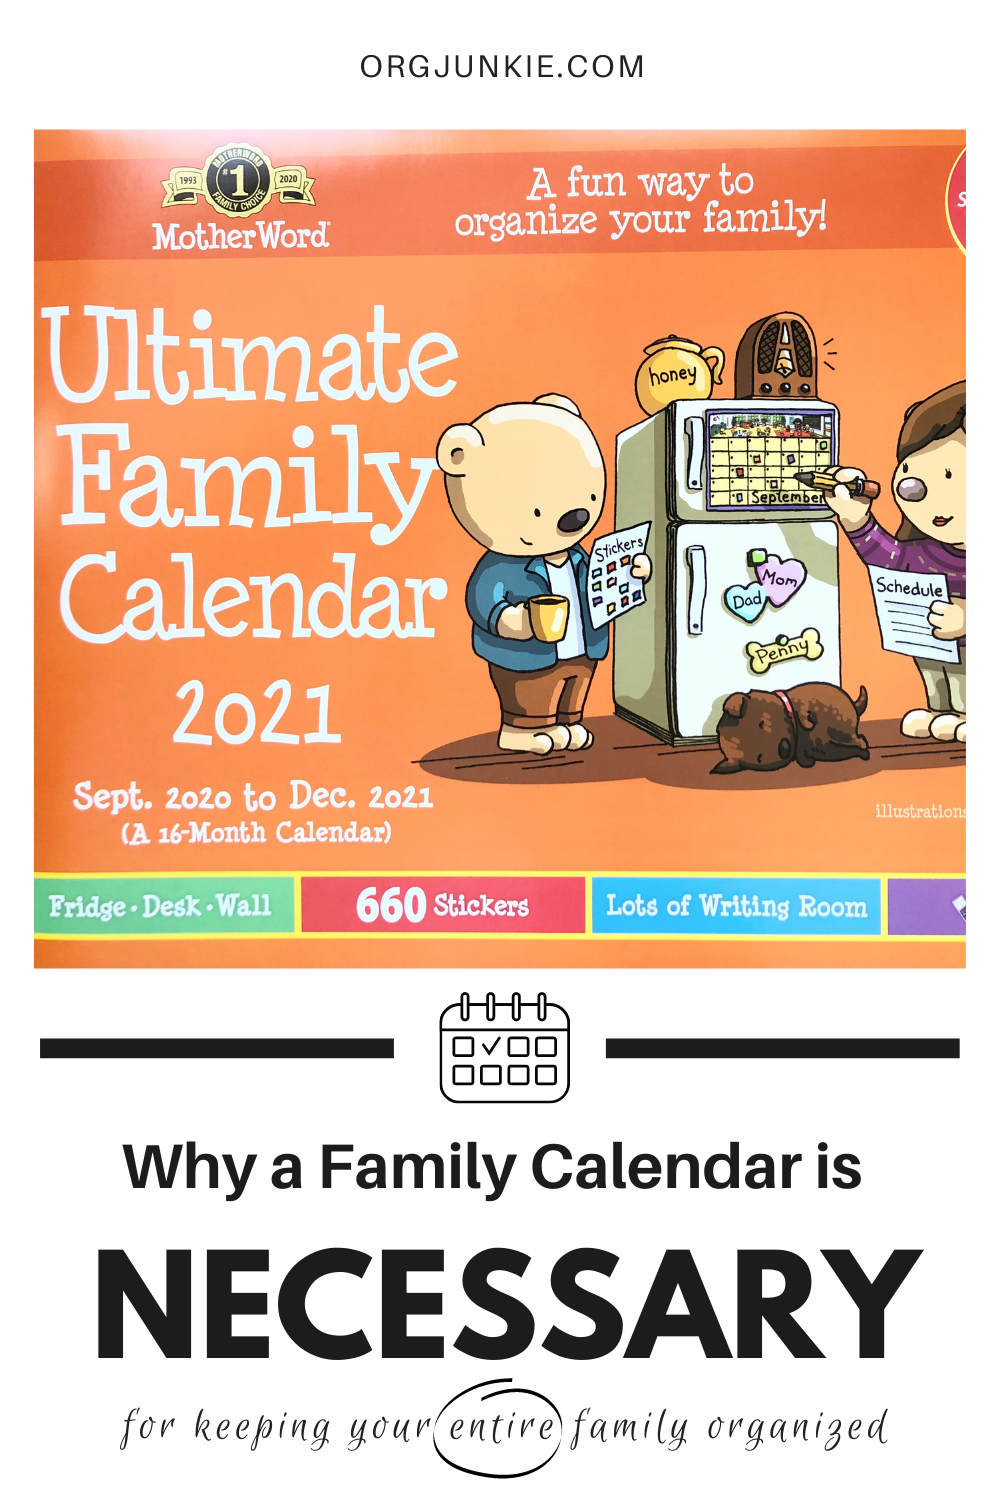 Why a Family Calendar is Necessary